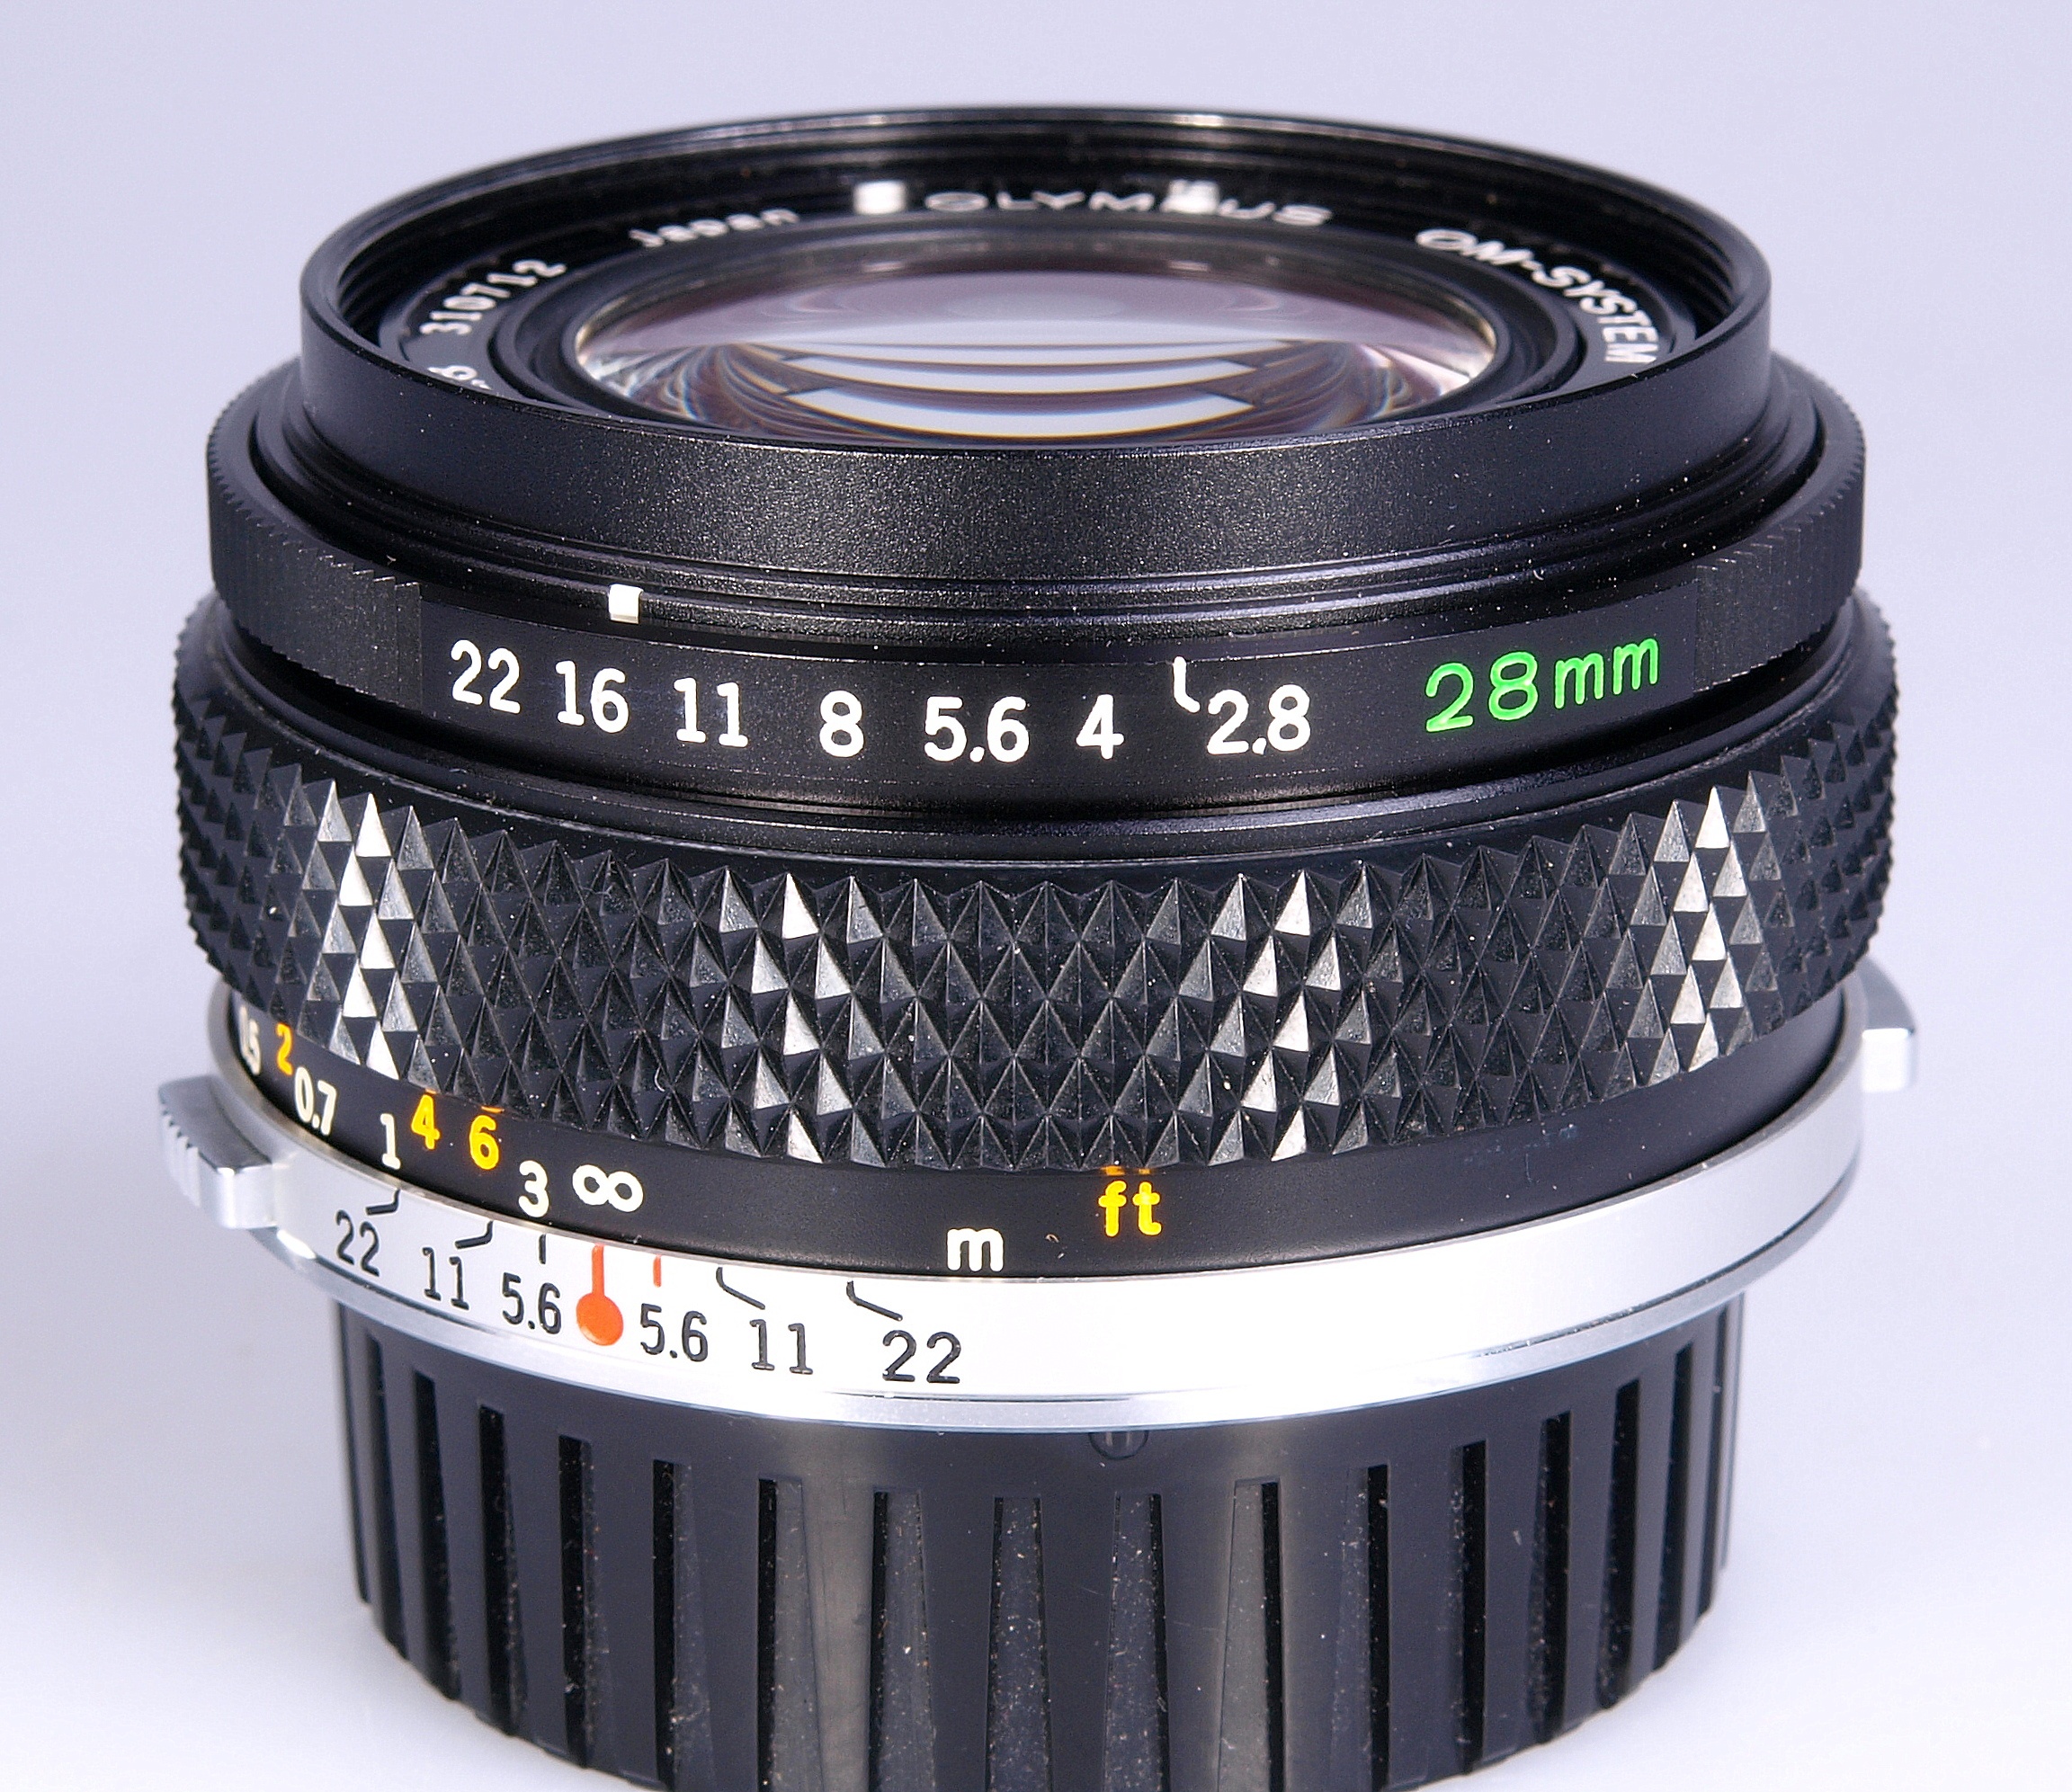 Olympus OMsystem Zuiko AutoW 28mm F2.8 prime lens